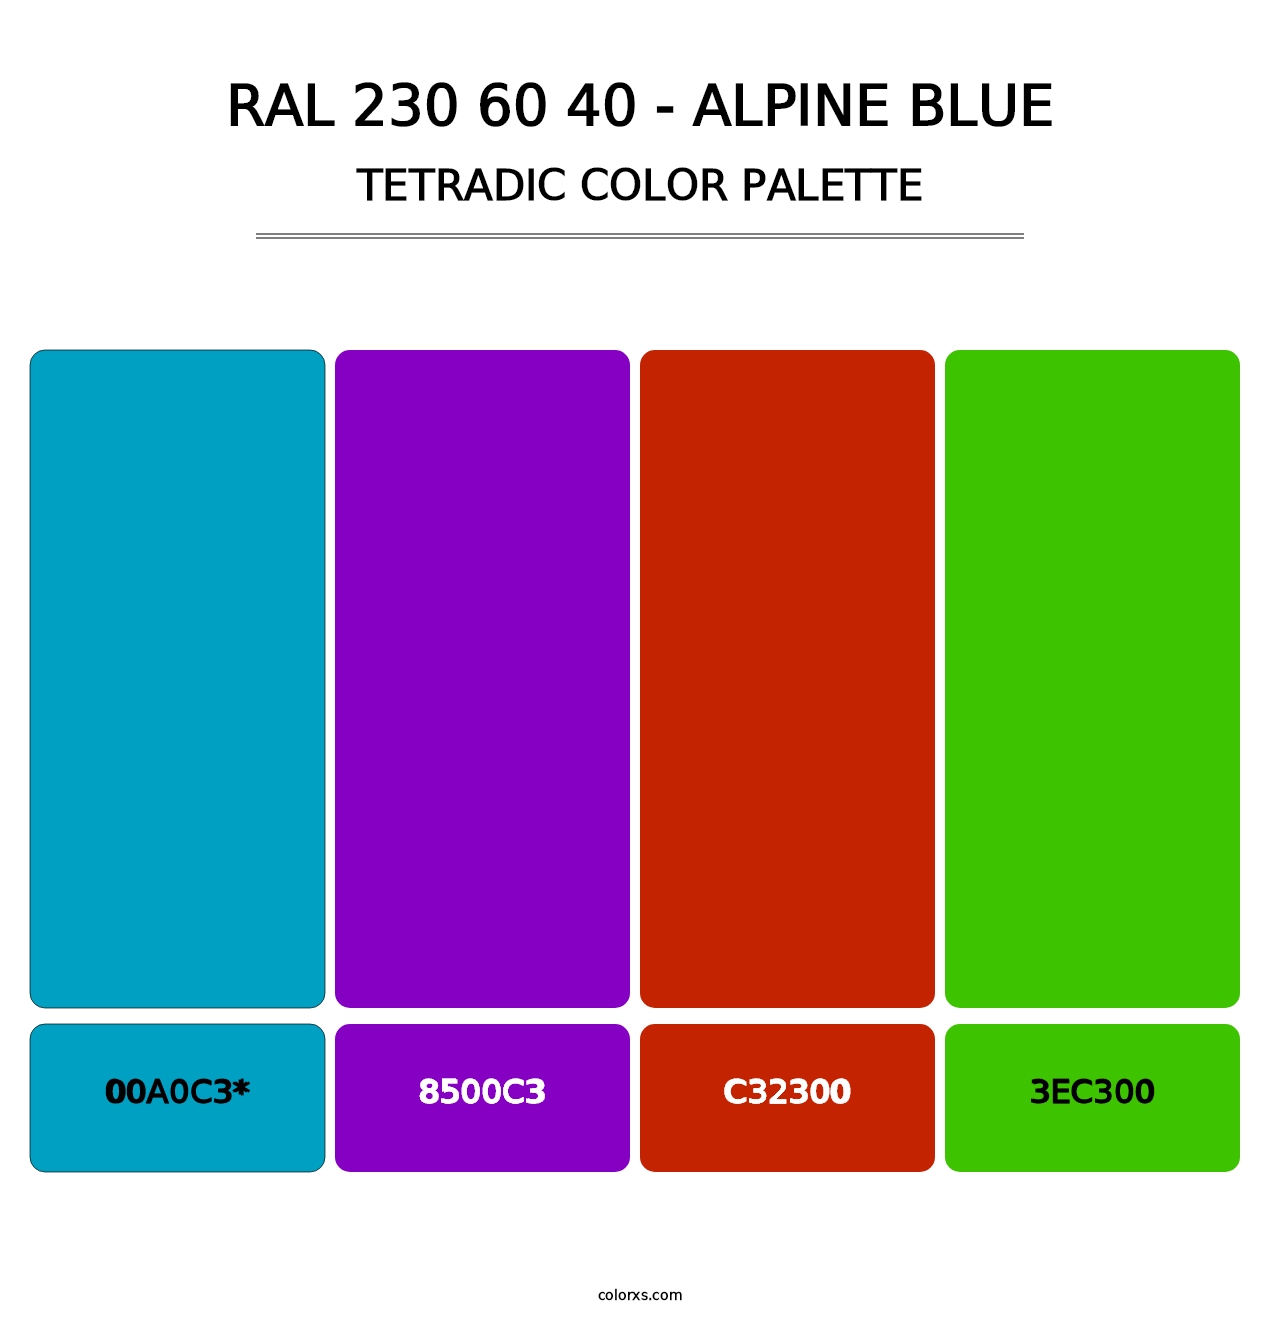 RAL 230 60 40 - Alpine Blue - Tetradic Color Palette